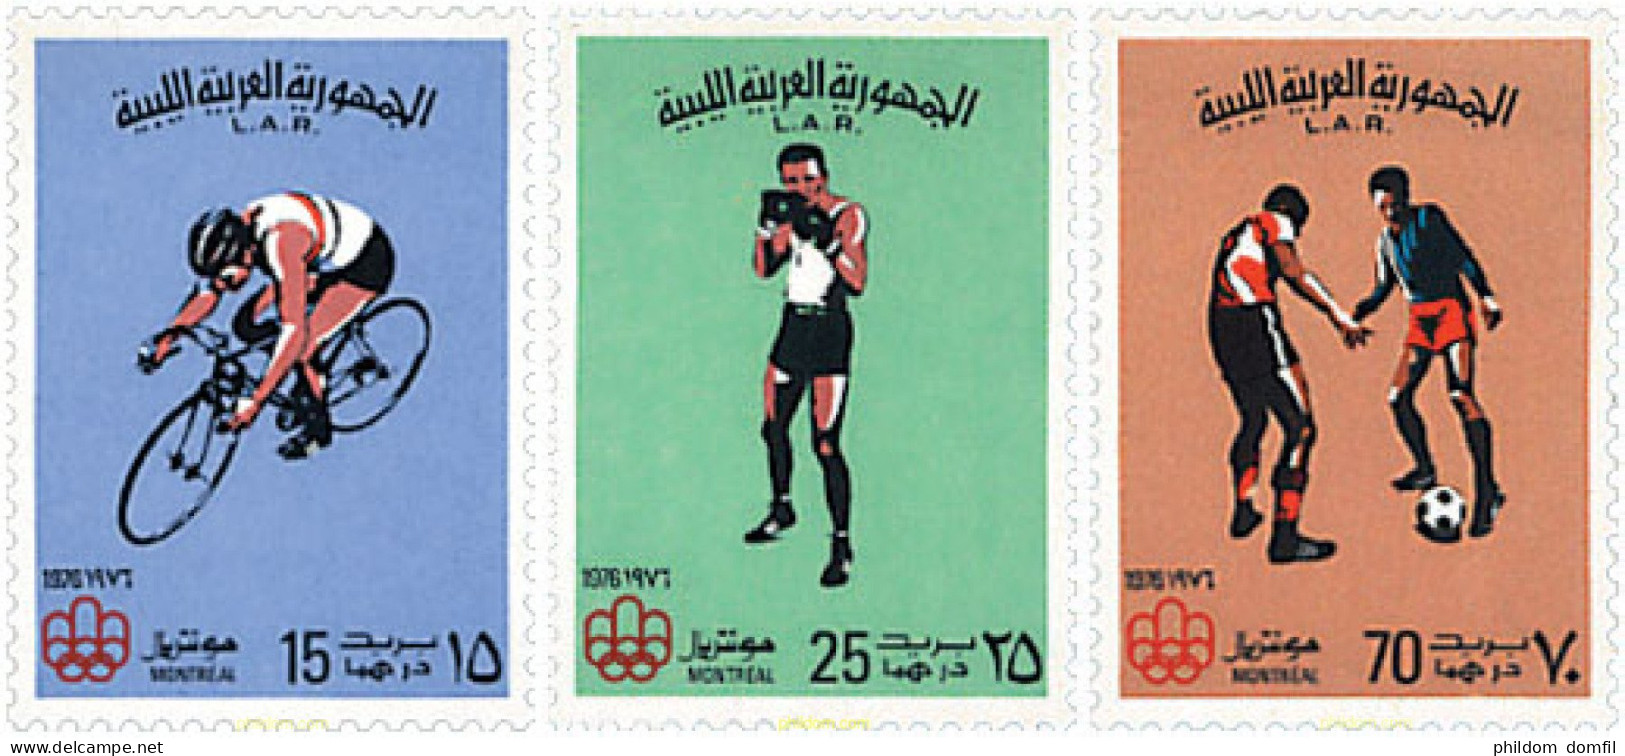 27564 MNH LIBIA 1976 21 JUEGOS OLIMPICOS VERANO MONTREAL 1976 - Libya